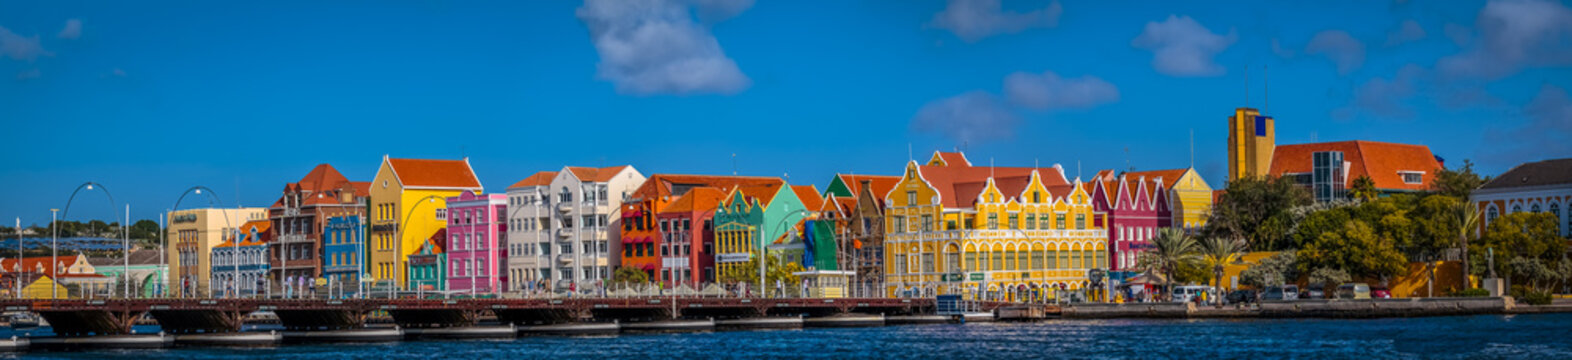 Willemstad Curacou kleurrijk skyline